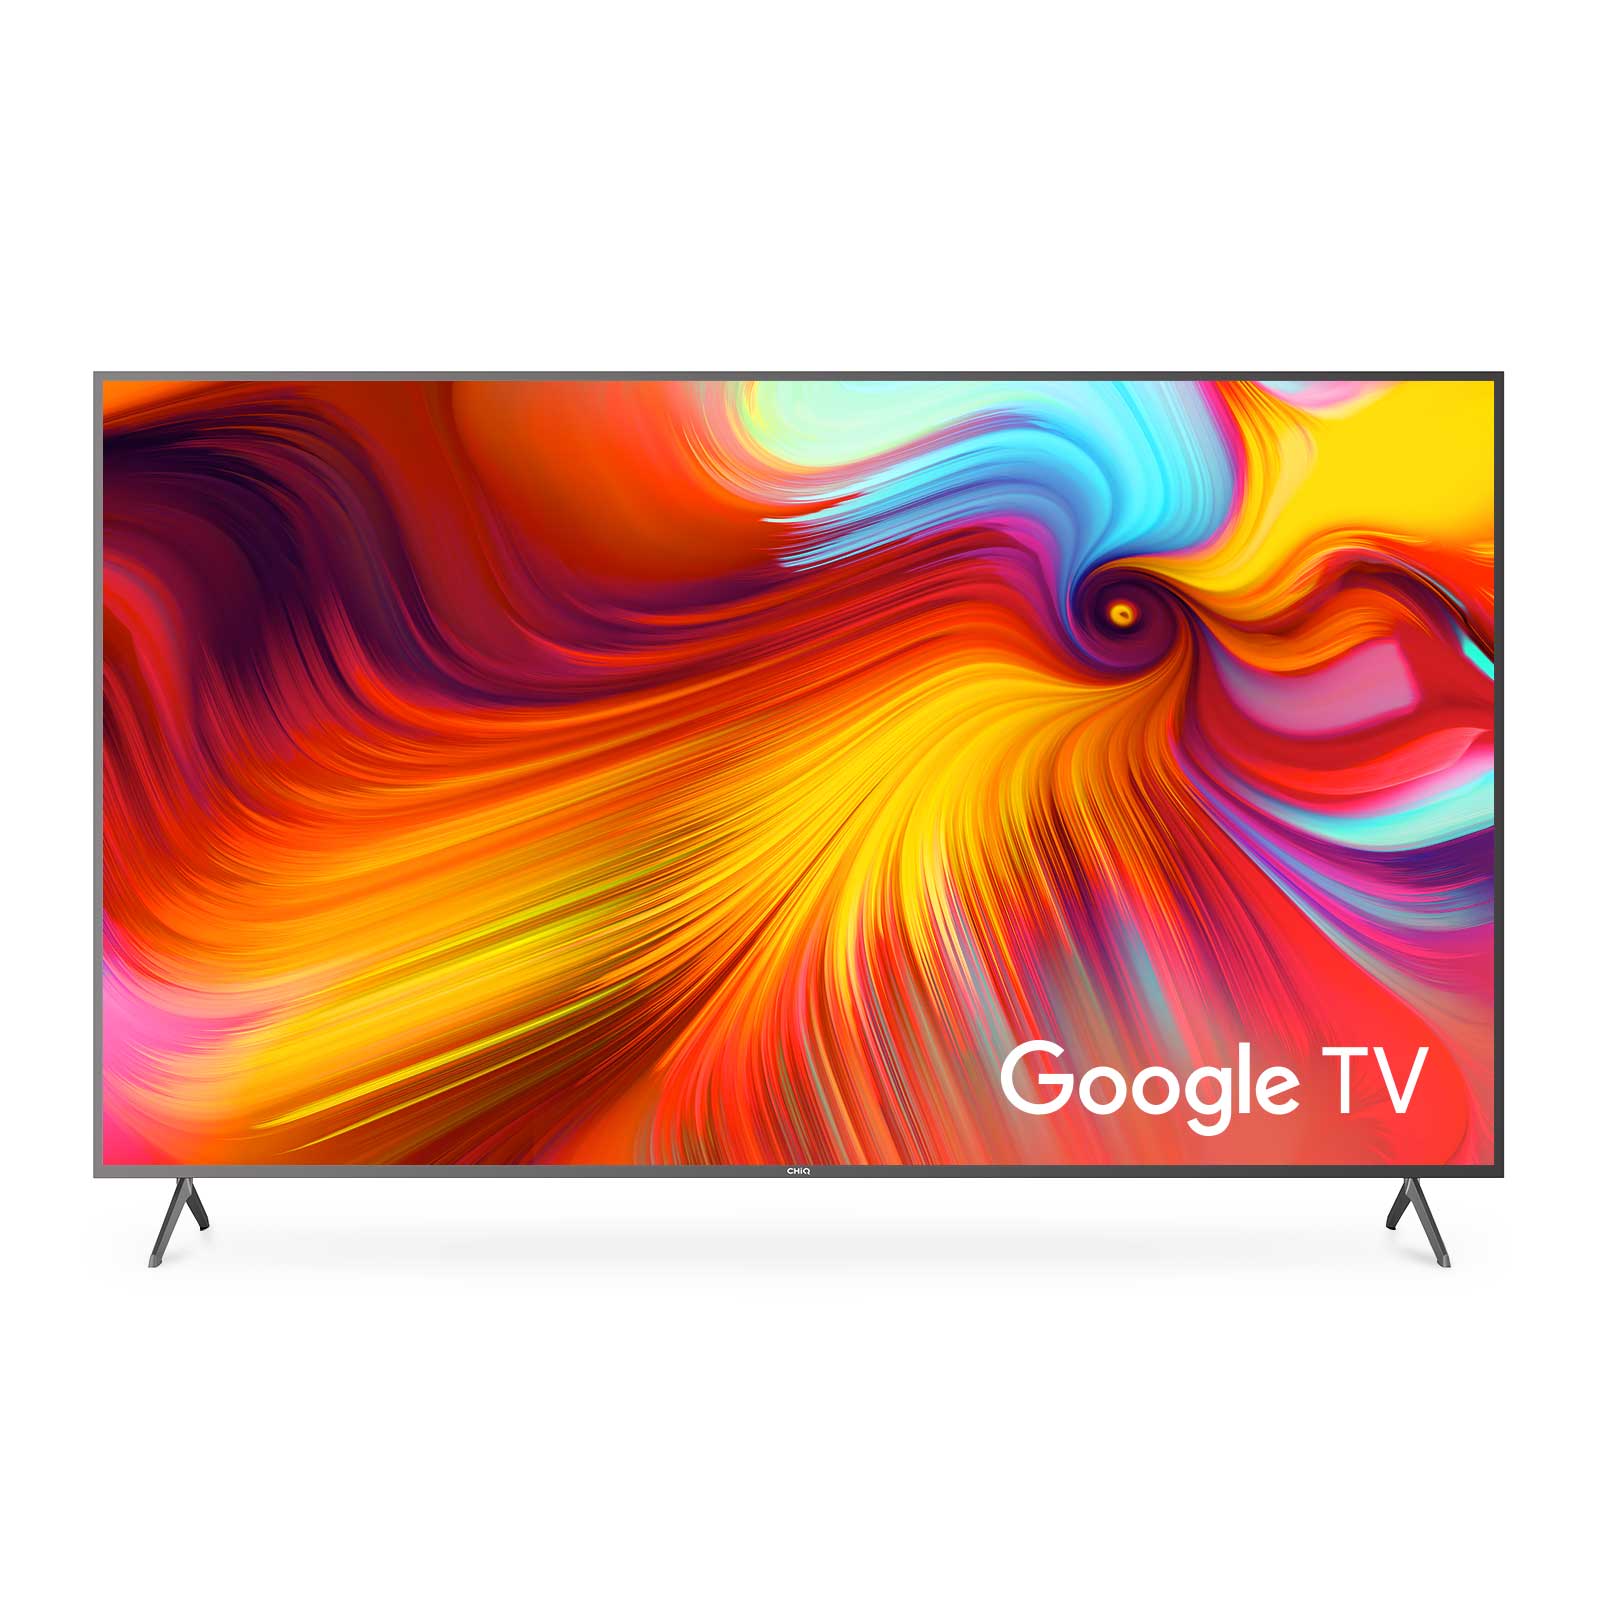 U98F8TG Google TV